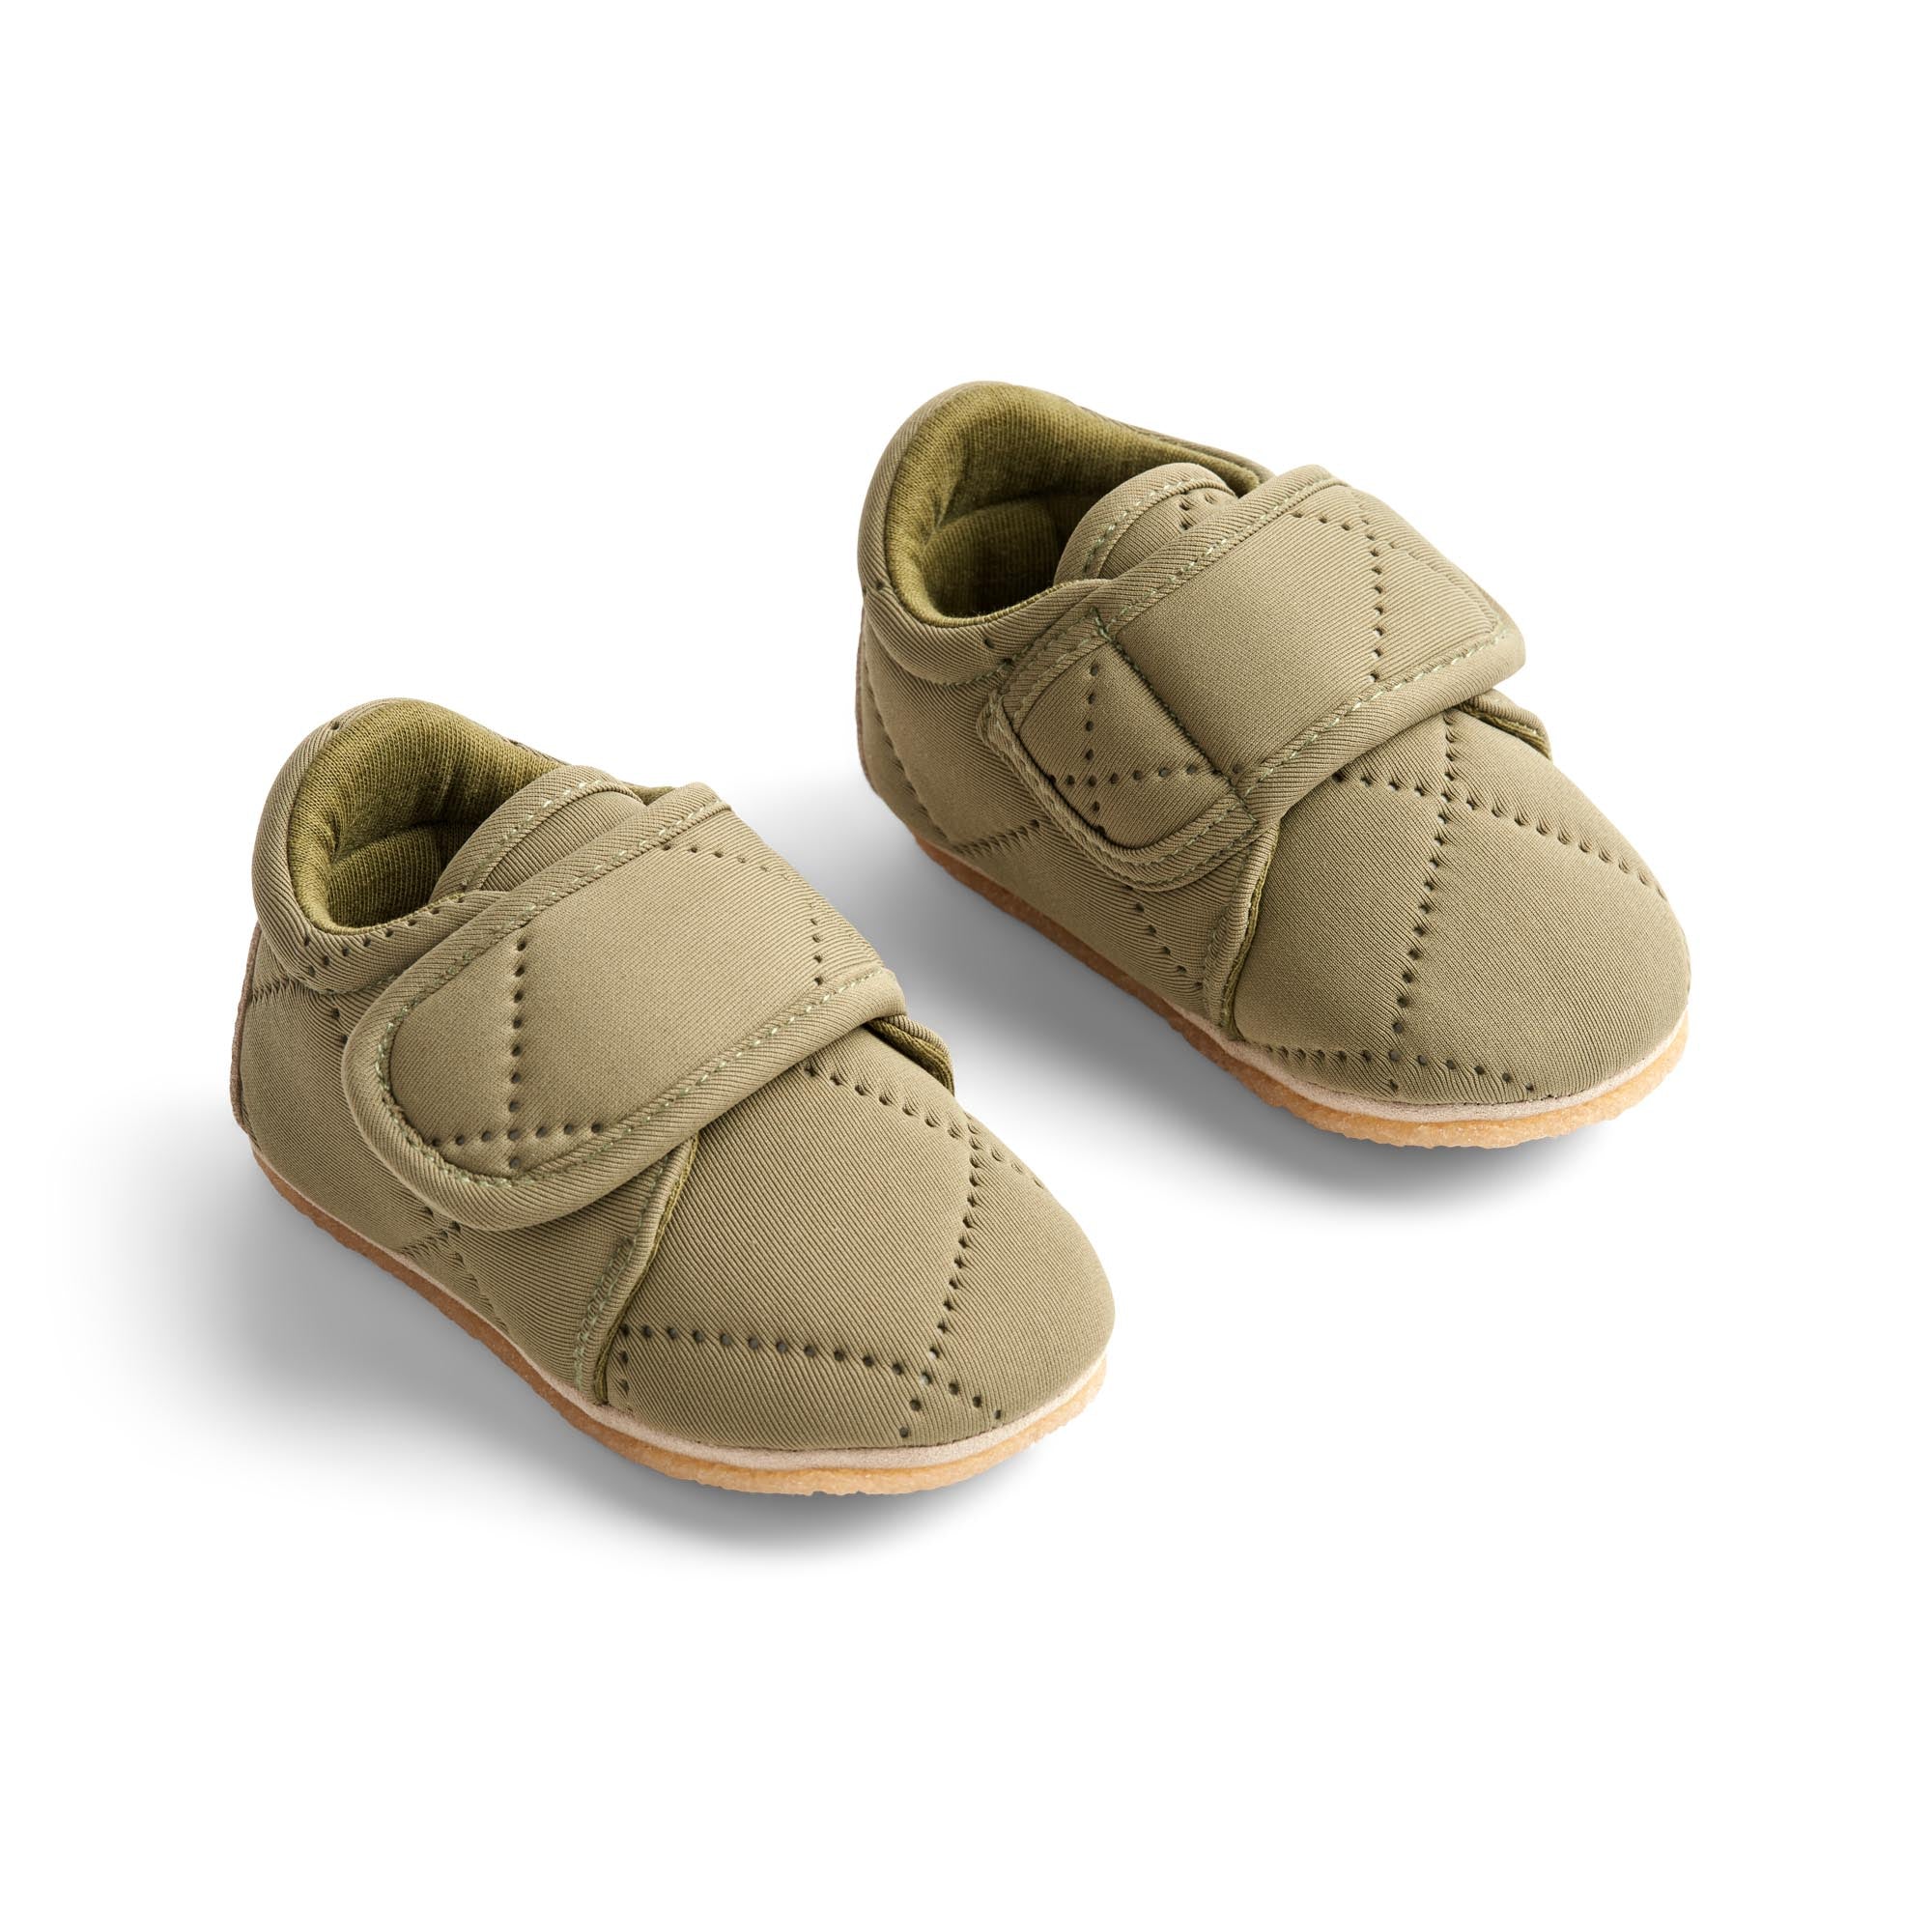 Wheat Footwear - Sasha Thermo Home Shoe, WF401h - Olive